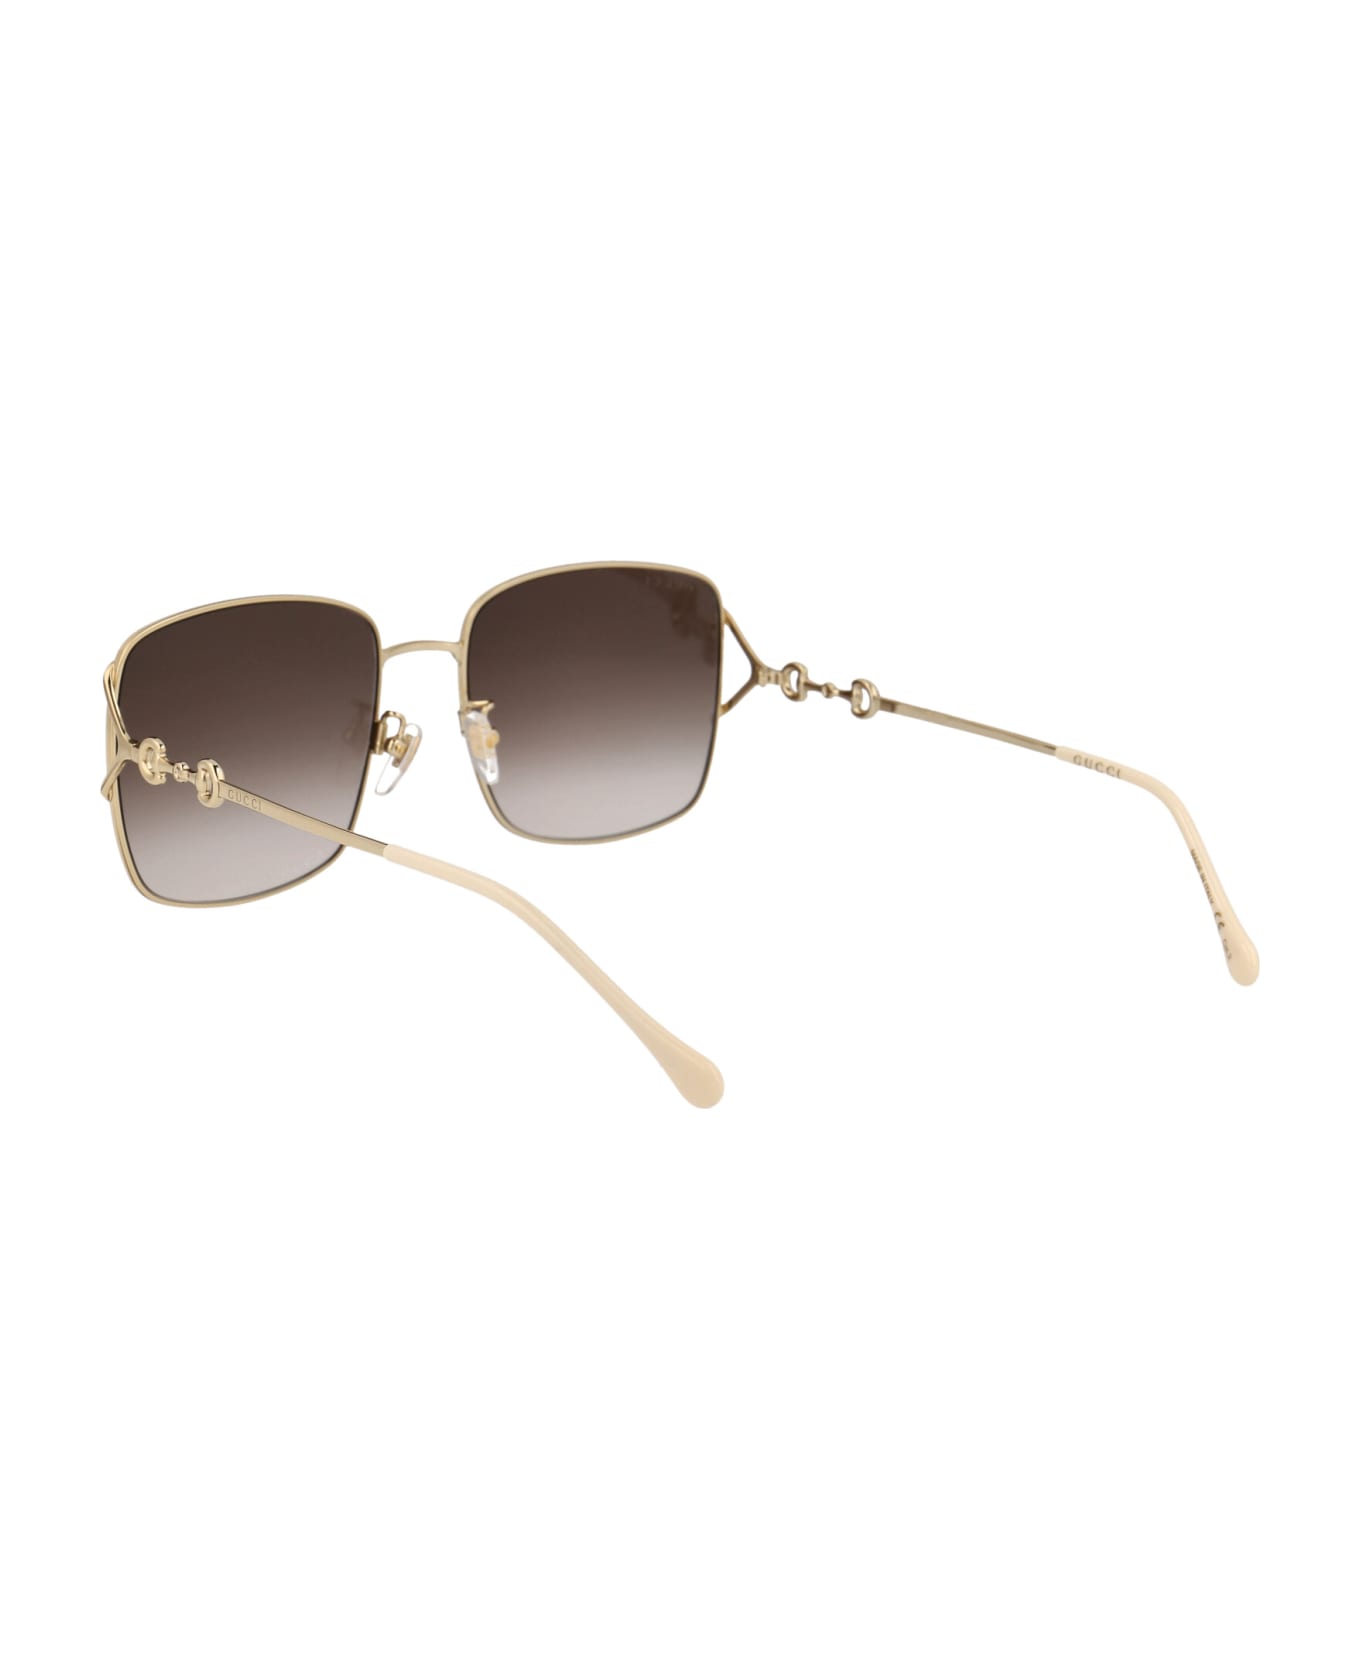 Gucci Eyewear Gg1018sk Sunglasses - 003 GOLD GOLD BROWN